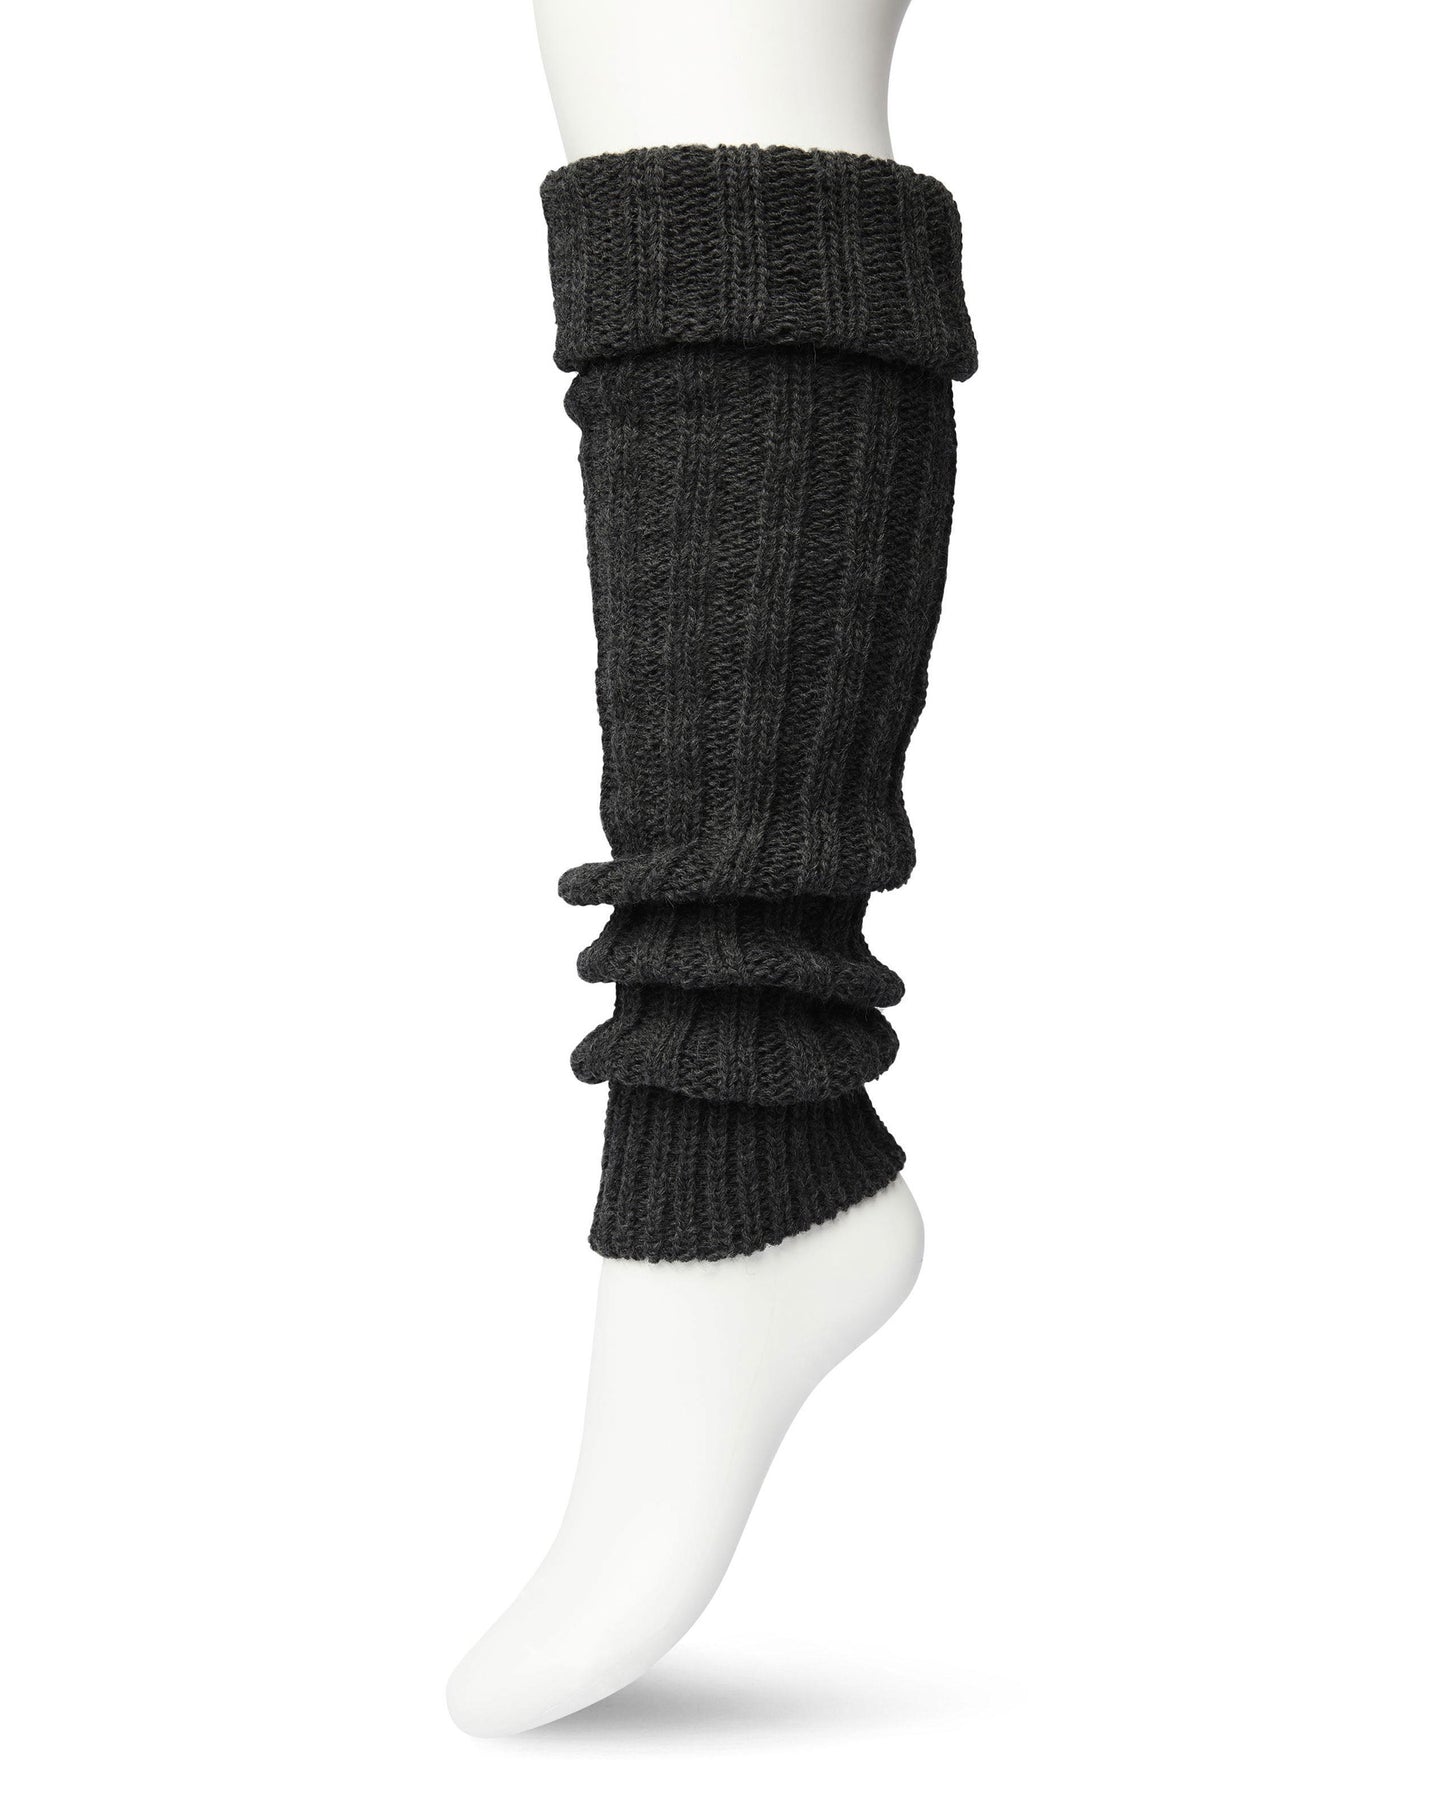 Bonnie Doon Sleever/Legwarmer BE021766 - dark antracite grey wool mix chunky knitted leg warmers